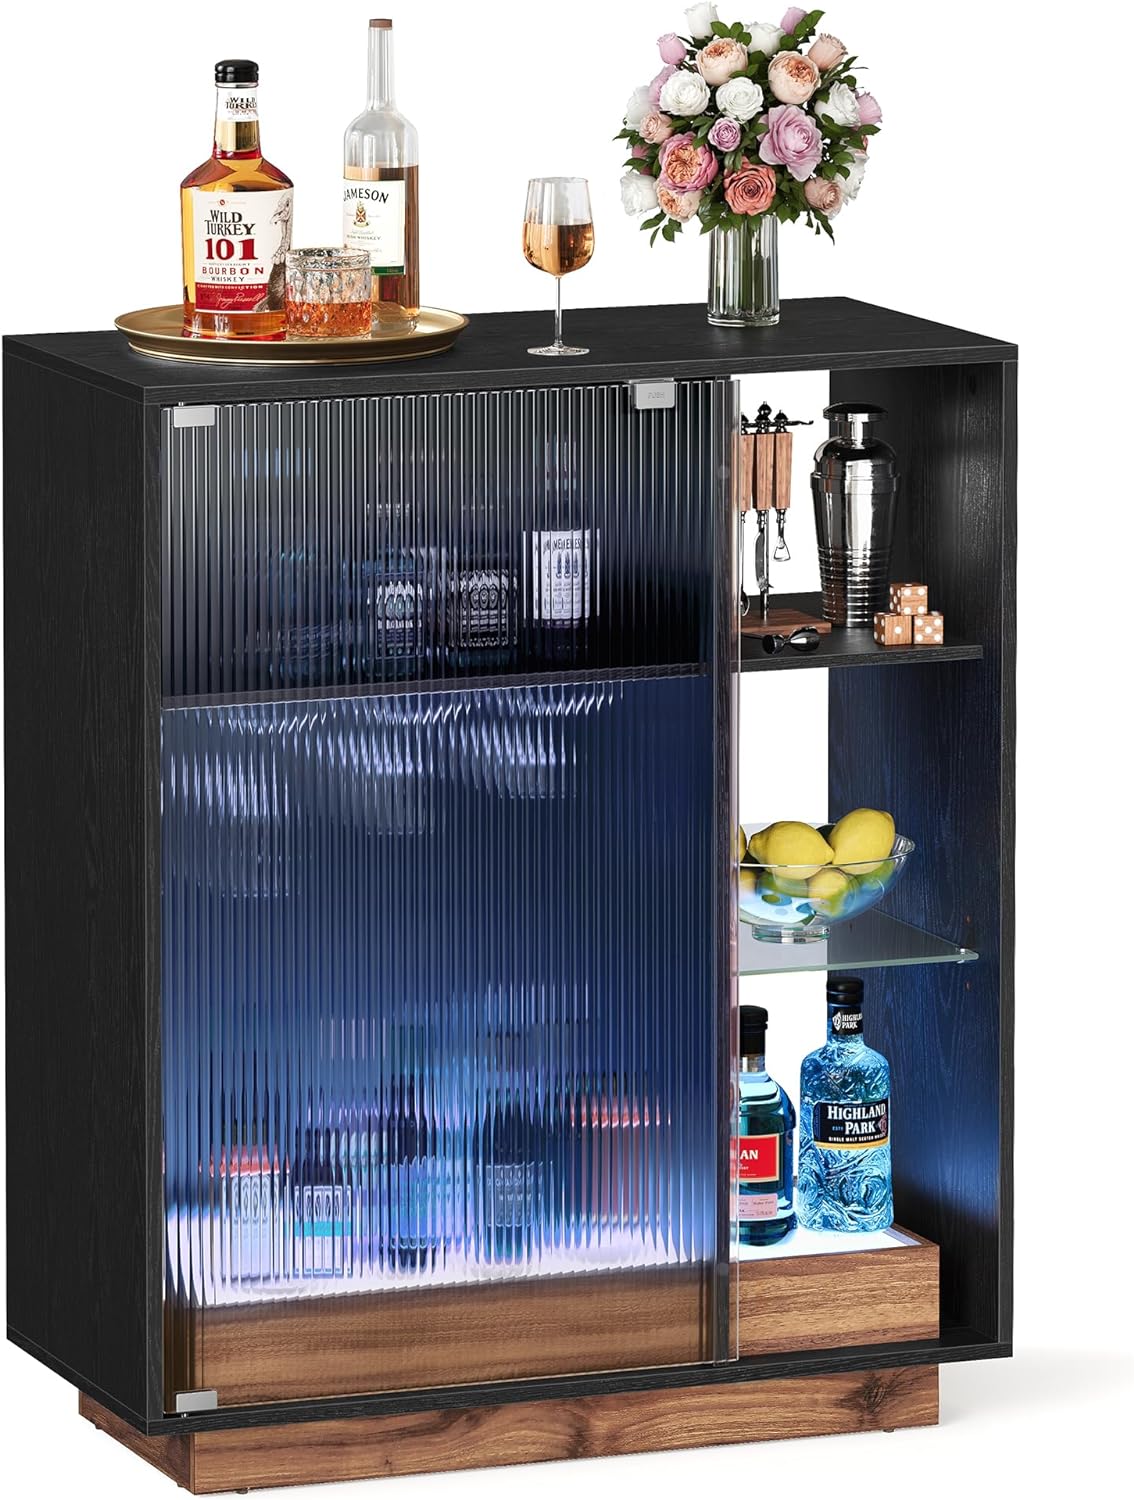 VASAGLE Wine Bar Cabinet with Lights, LED Sideboard Cabinet with Wine Storage, Coffee Bar Cabinet for Liquor, with Glass Holder, Reeded Glass Door, for Living Room, Ebony Black UBBK361B01